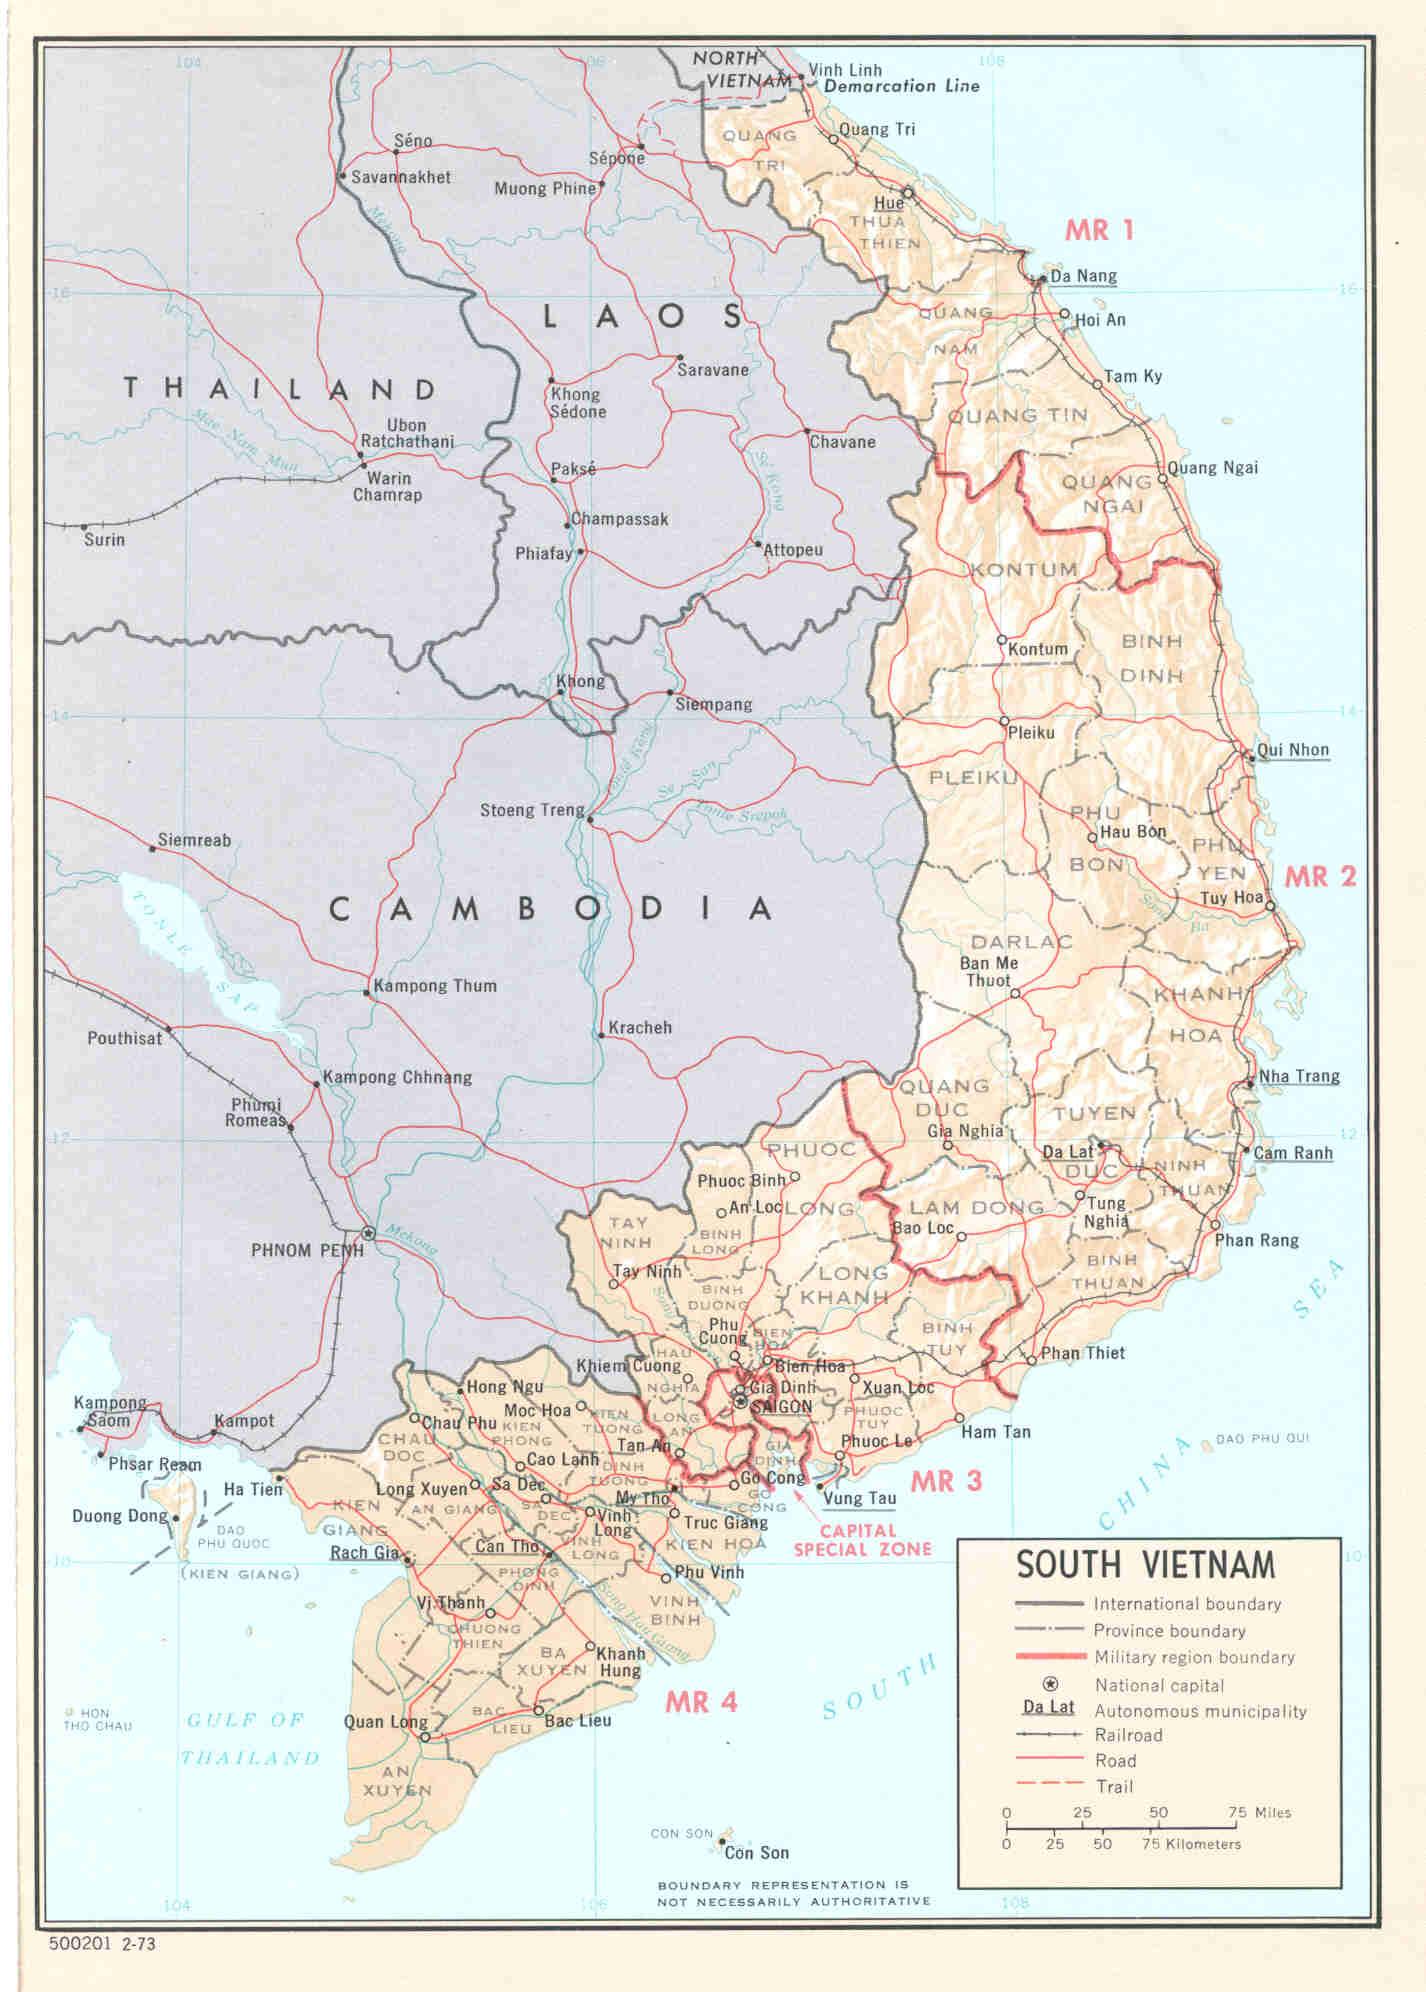 1973 Military Regions